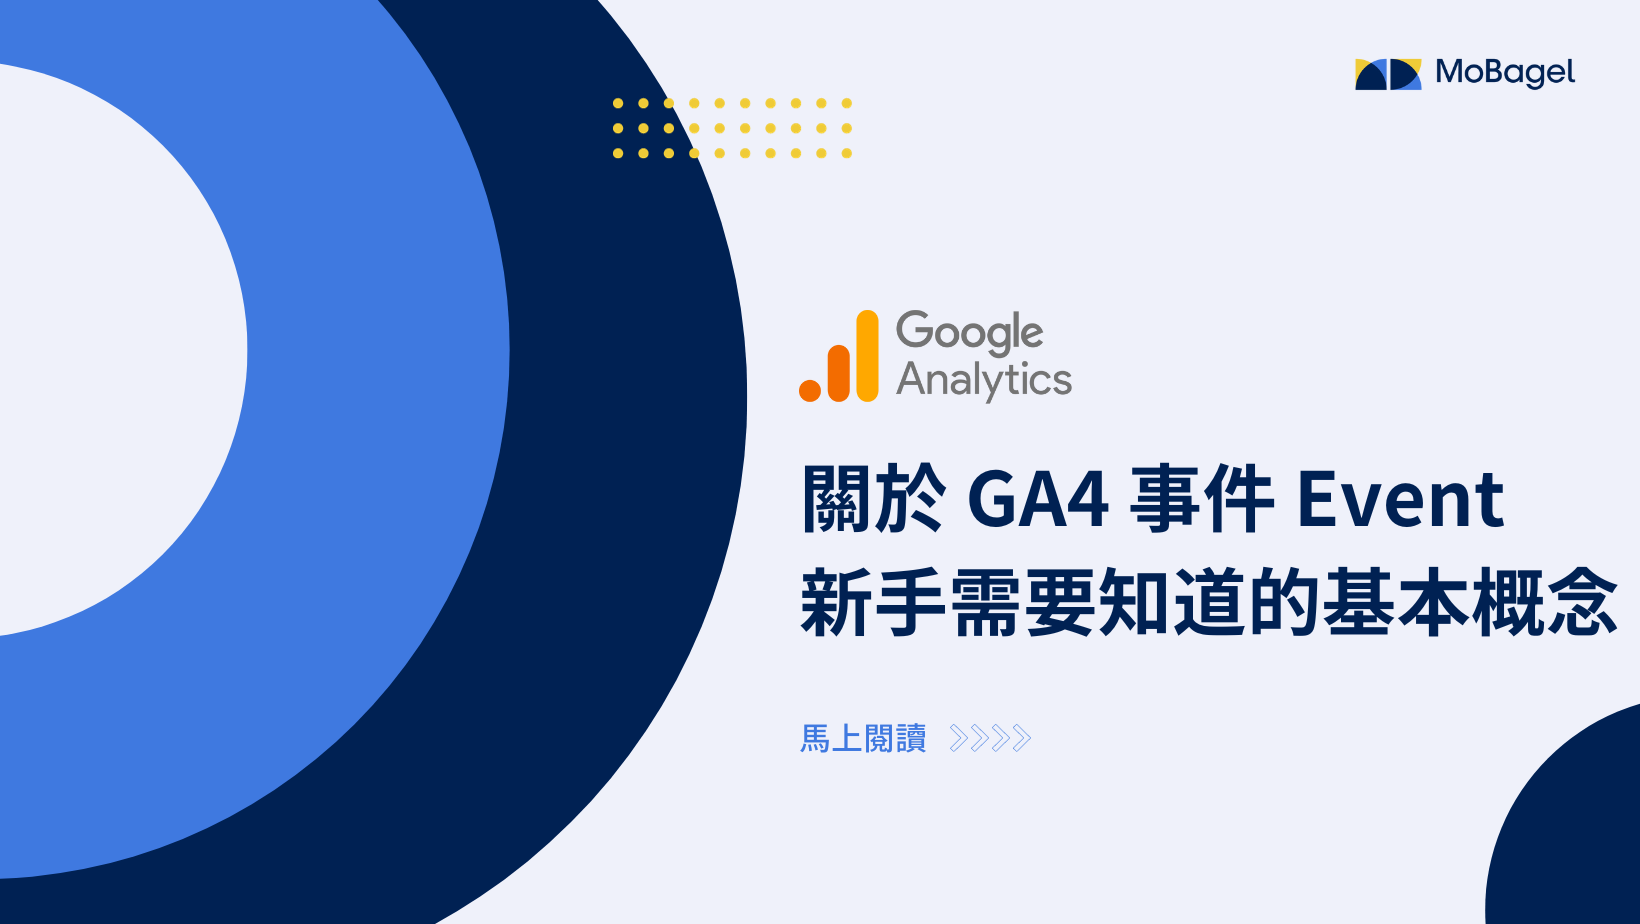 ga4-event-cover